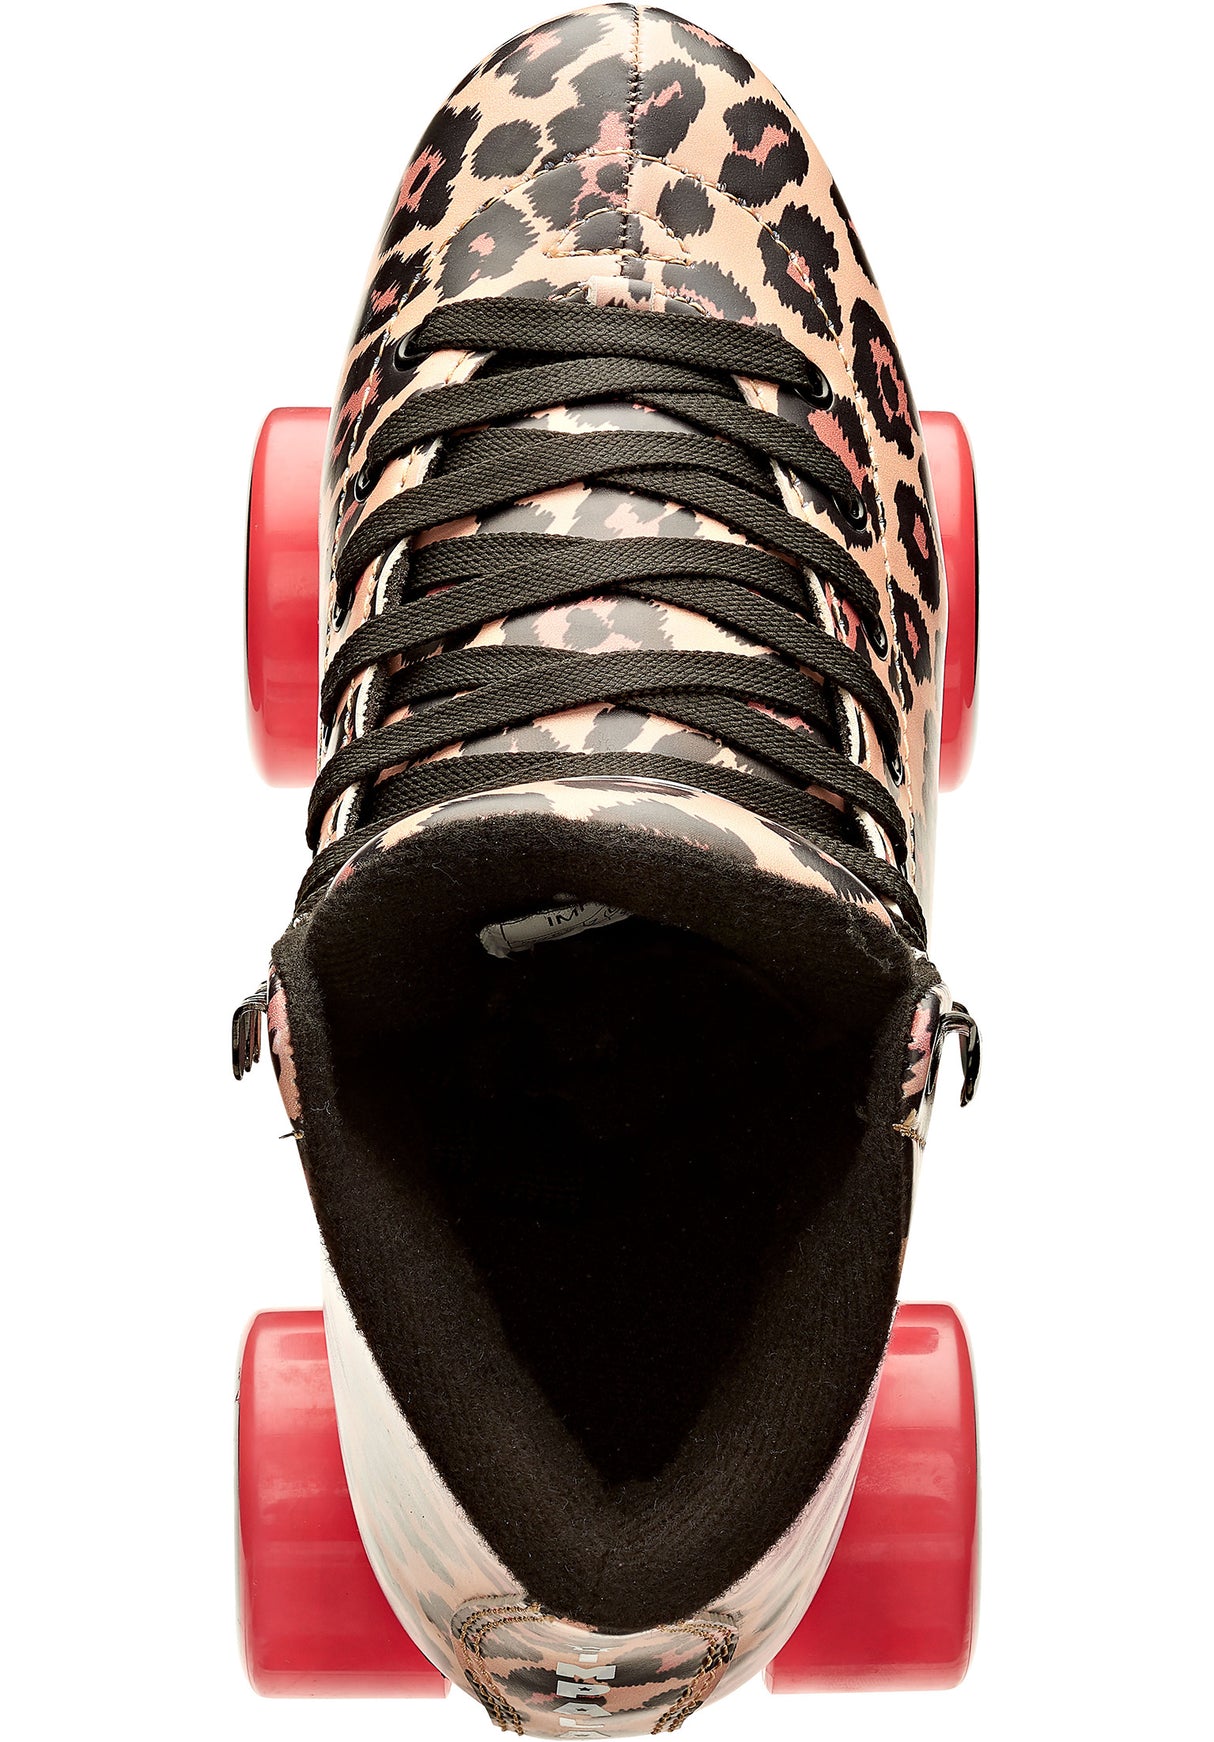 Quad Rollschuhe / Rollerskates leopard Close-Up1